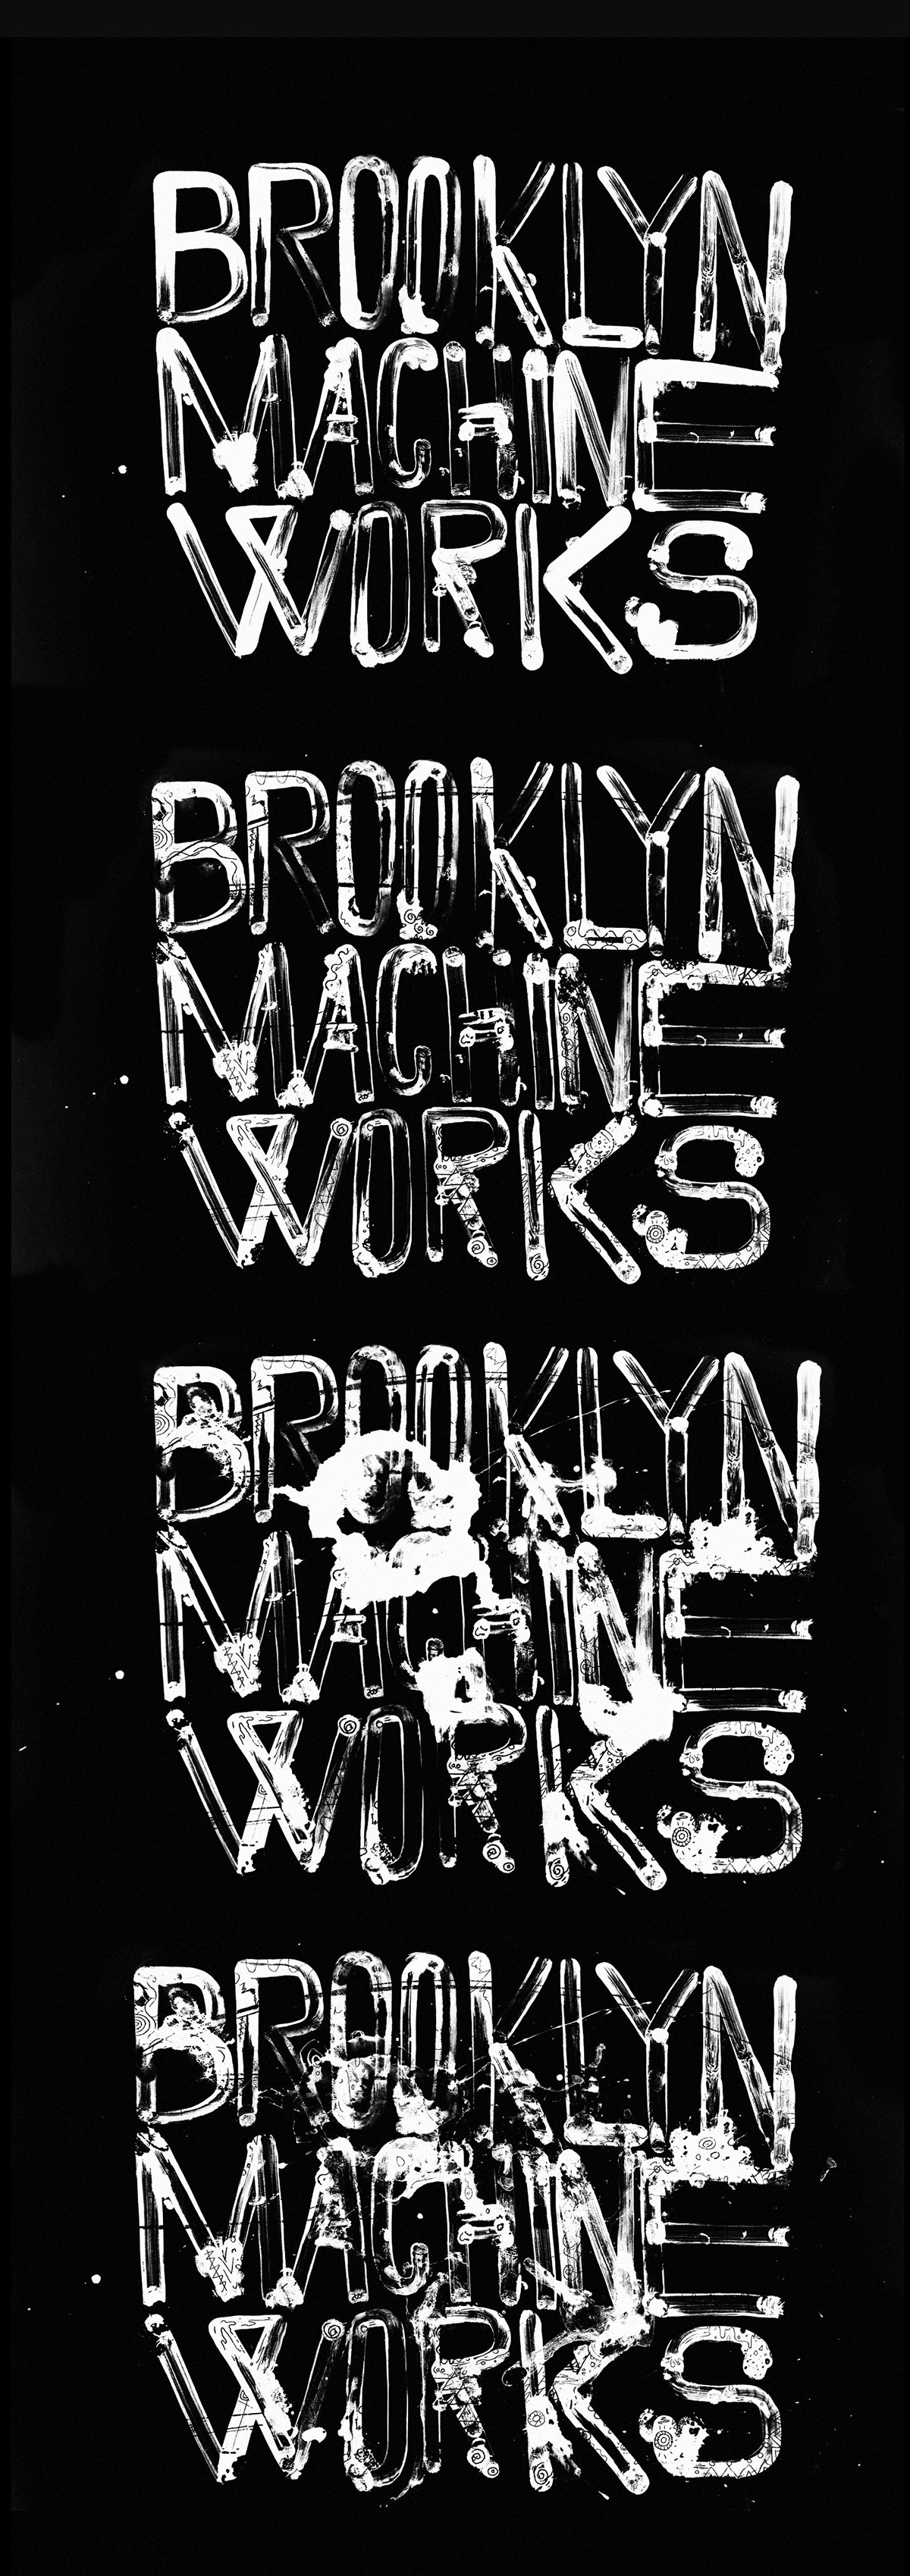 Brooklyn machine works Pharrell iammago dovjenko mago magomed the keystone union 2010 2011